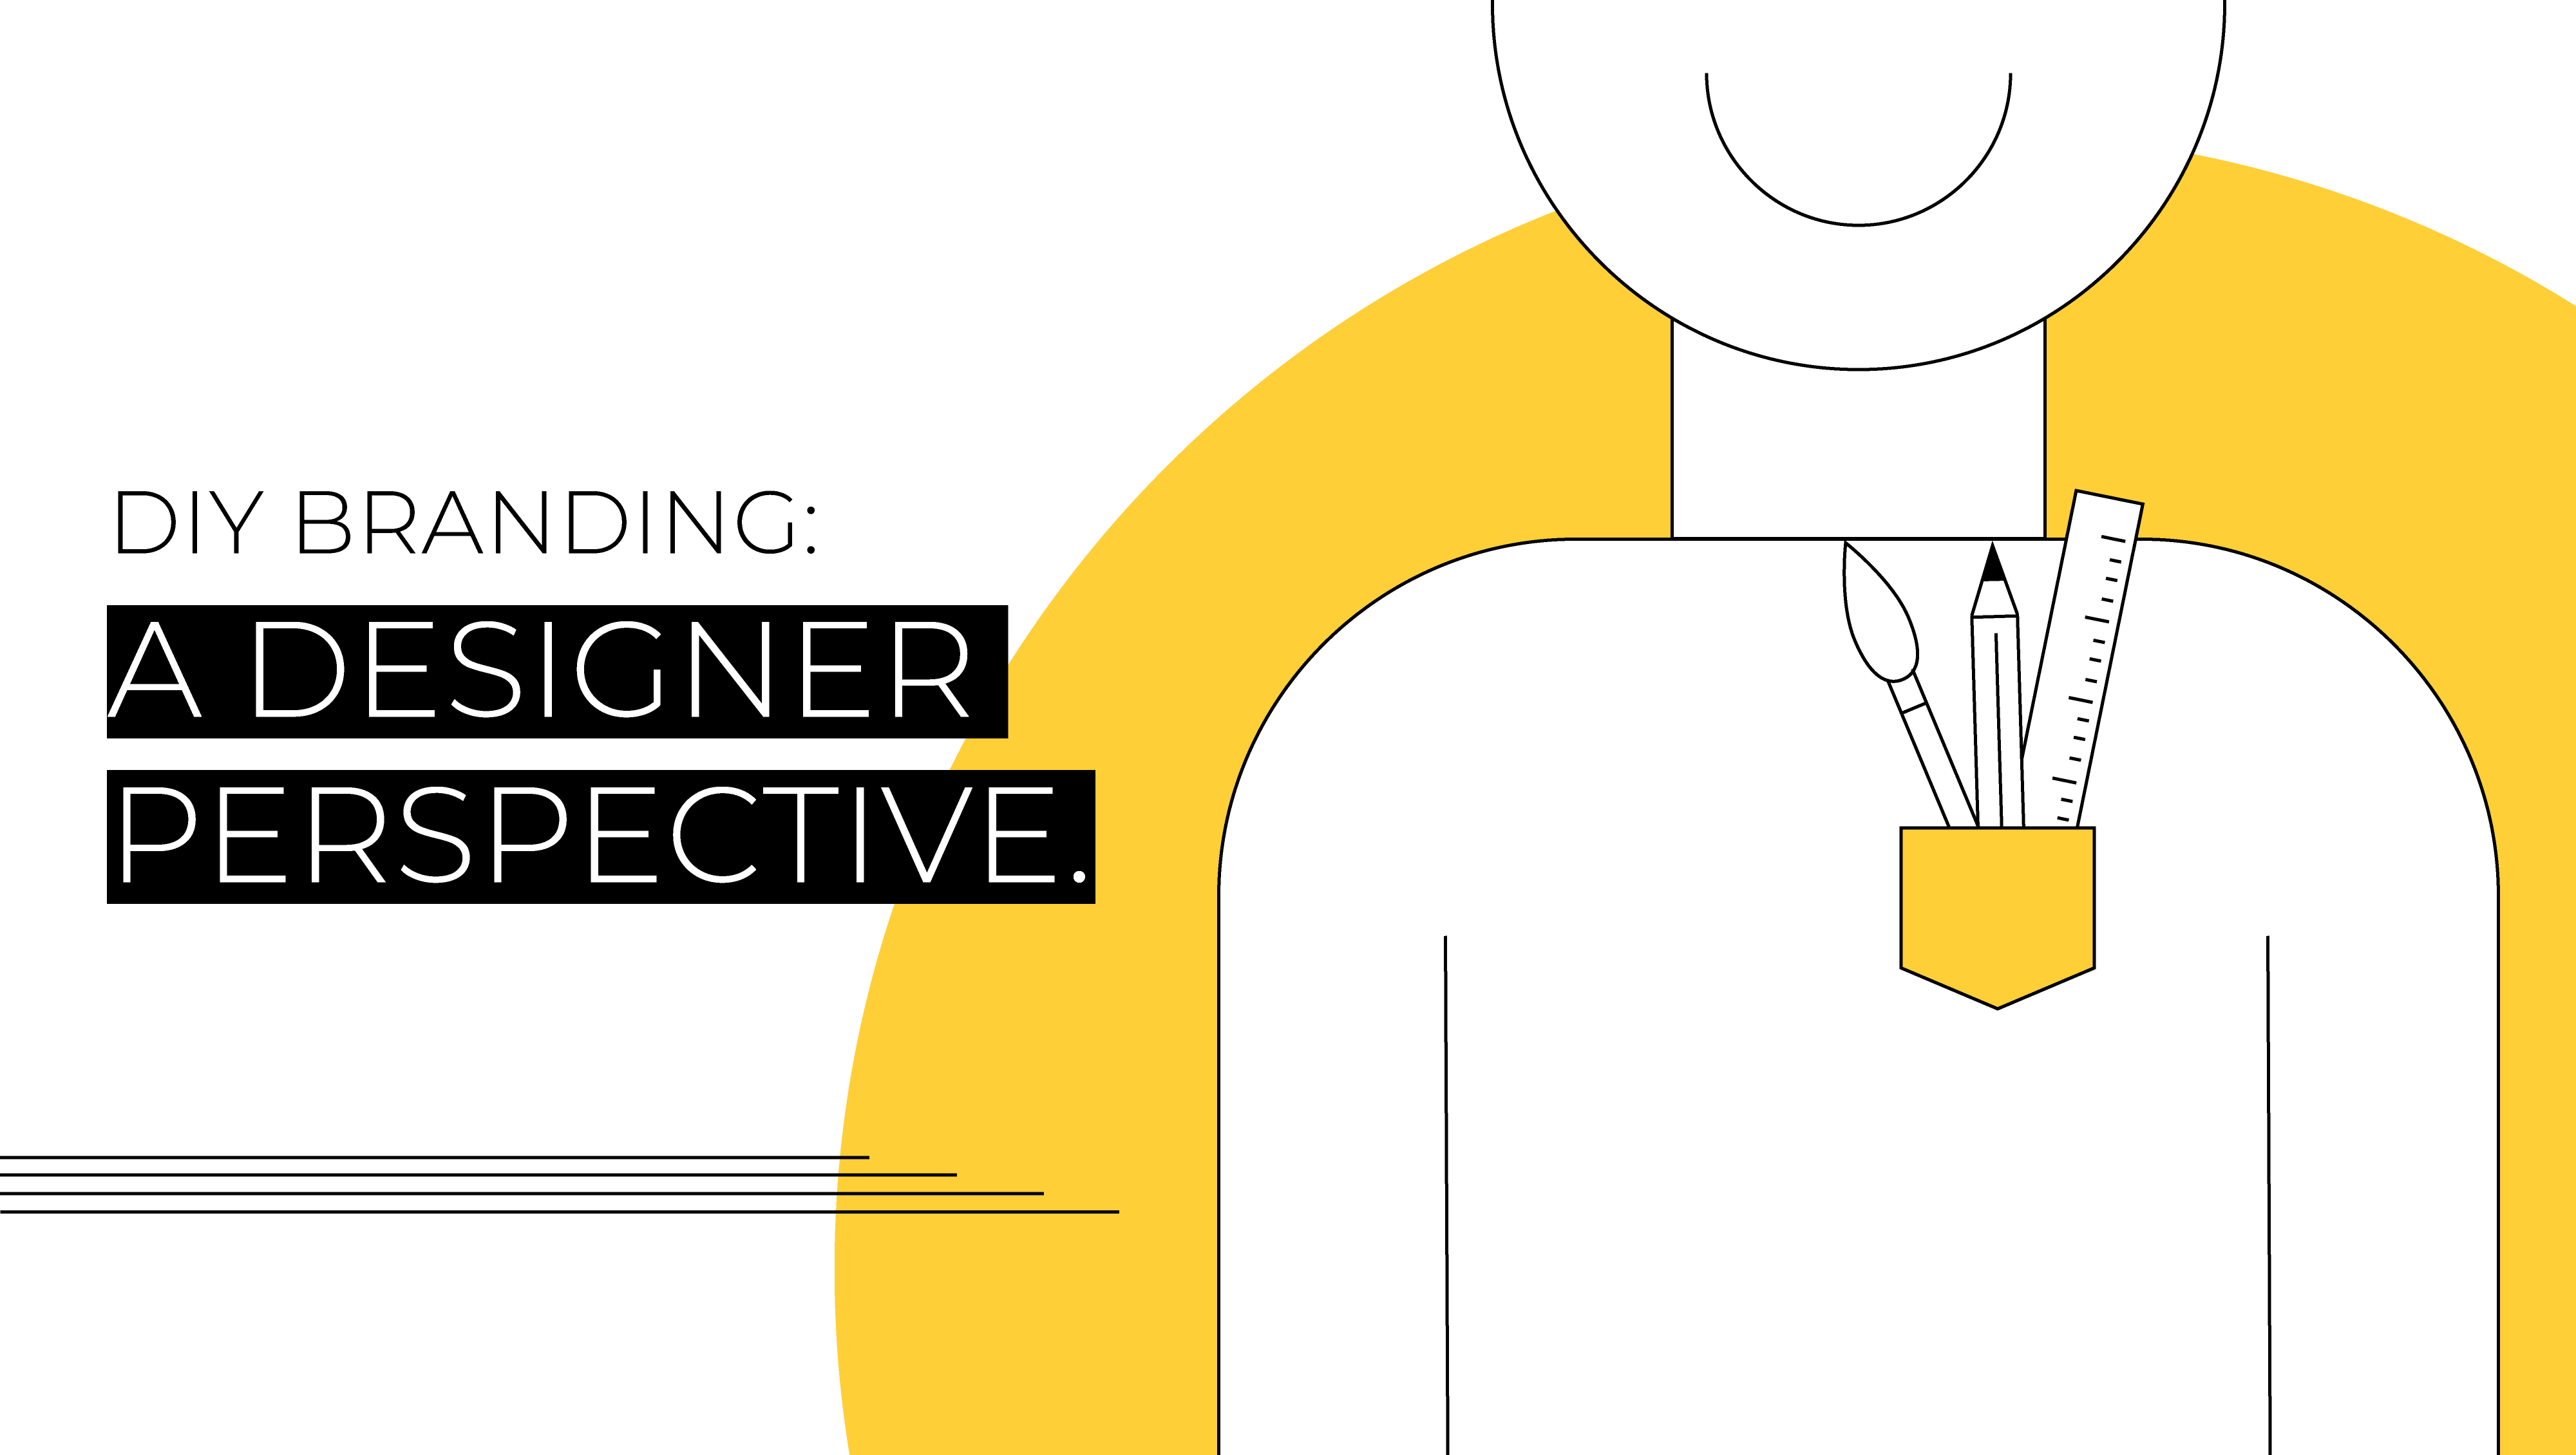 DIY BRANDING: A Designer Perspective.